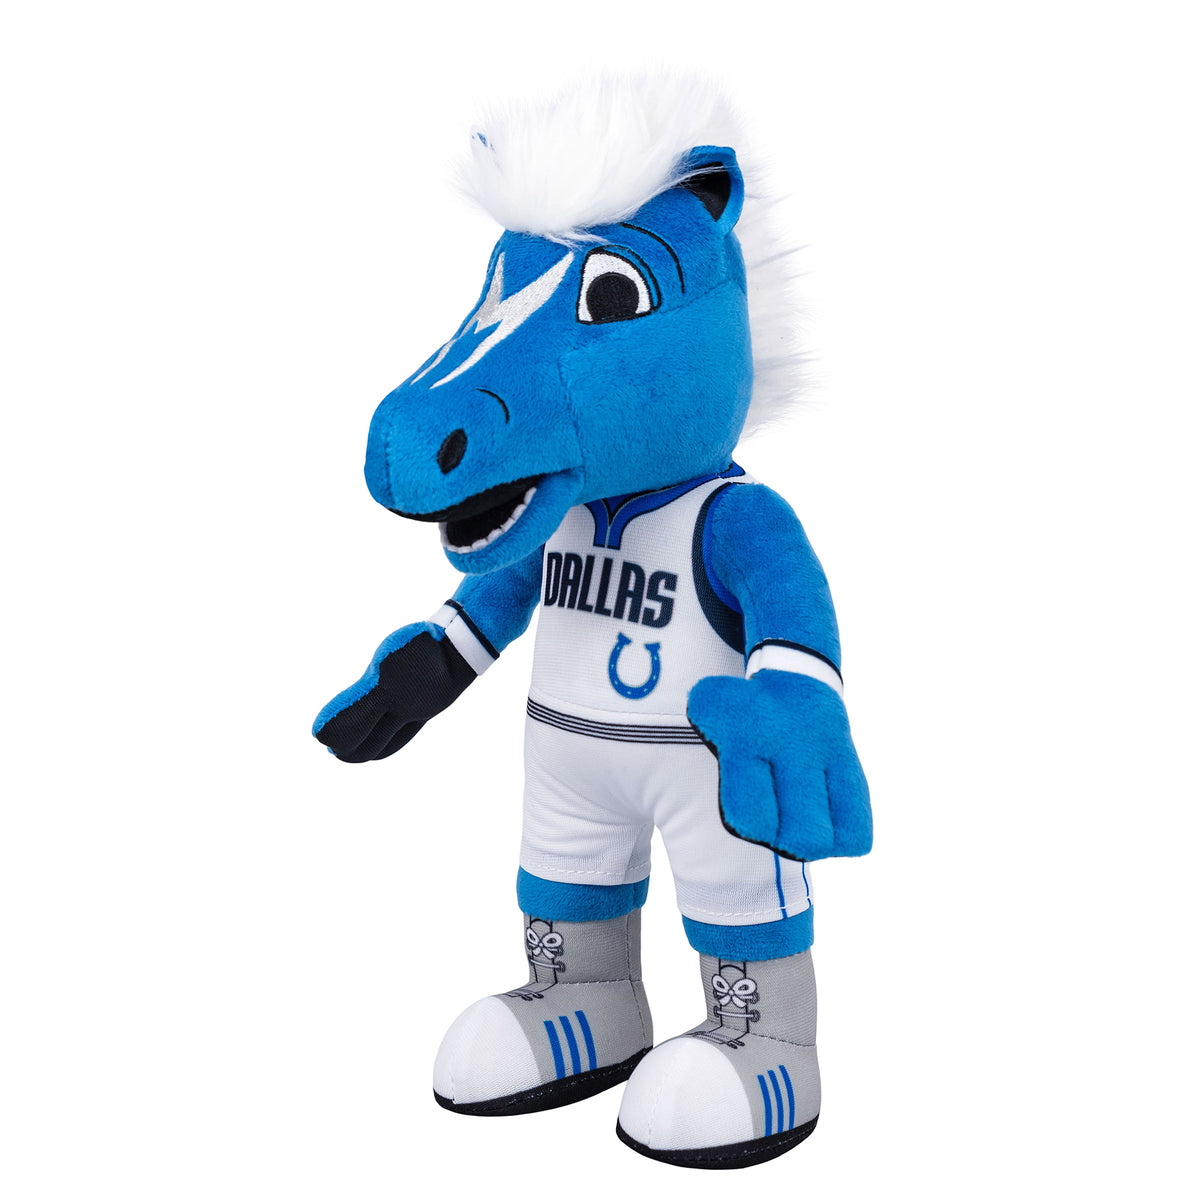 Dallas Mavericks Champ 10&quot; Mascot Plush Figure